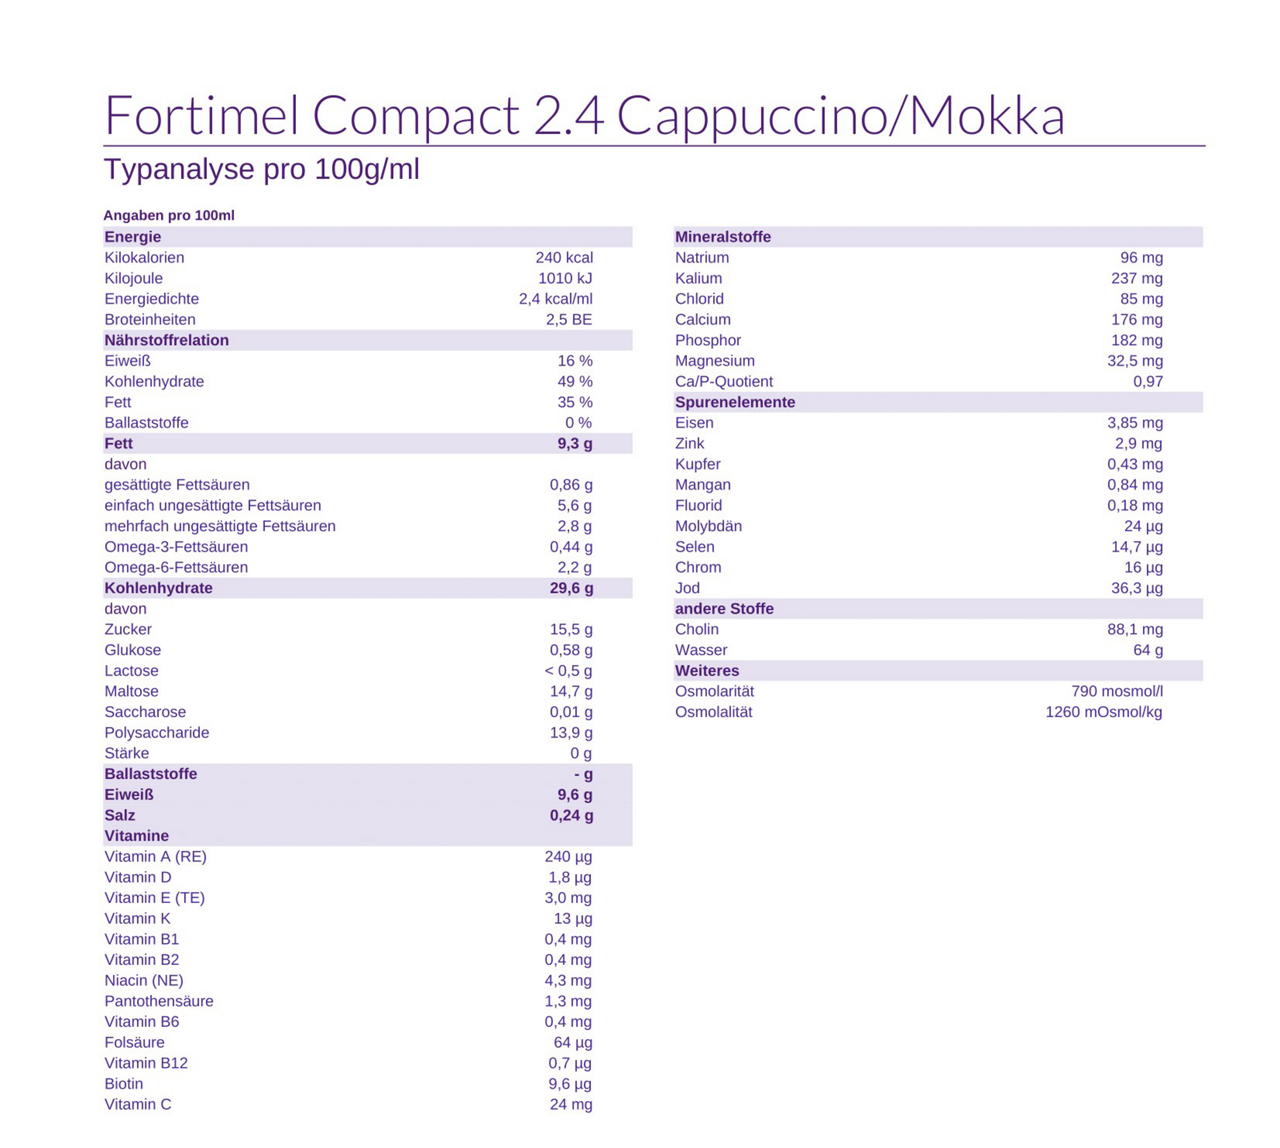 Fortimel Compact 2.4 Cappuccino Nährwerte